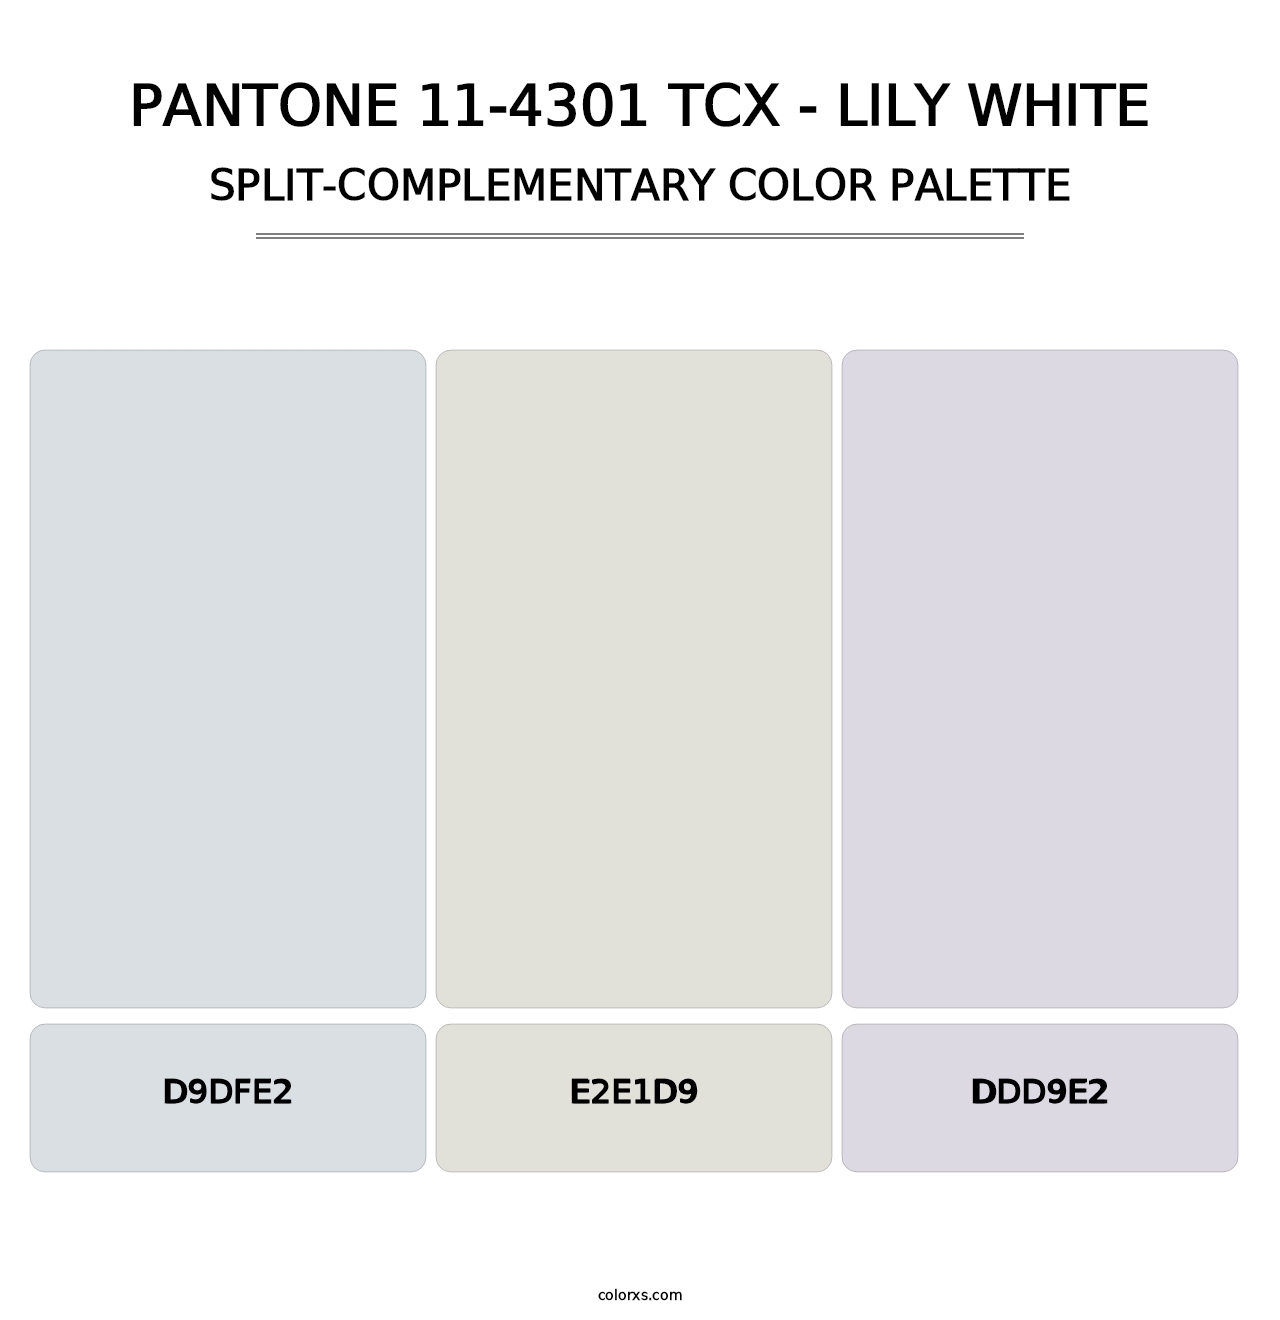 PANTONE 11-4301 TCX - Lily White - Split-Complementary Color Palette